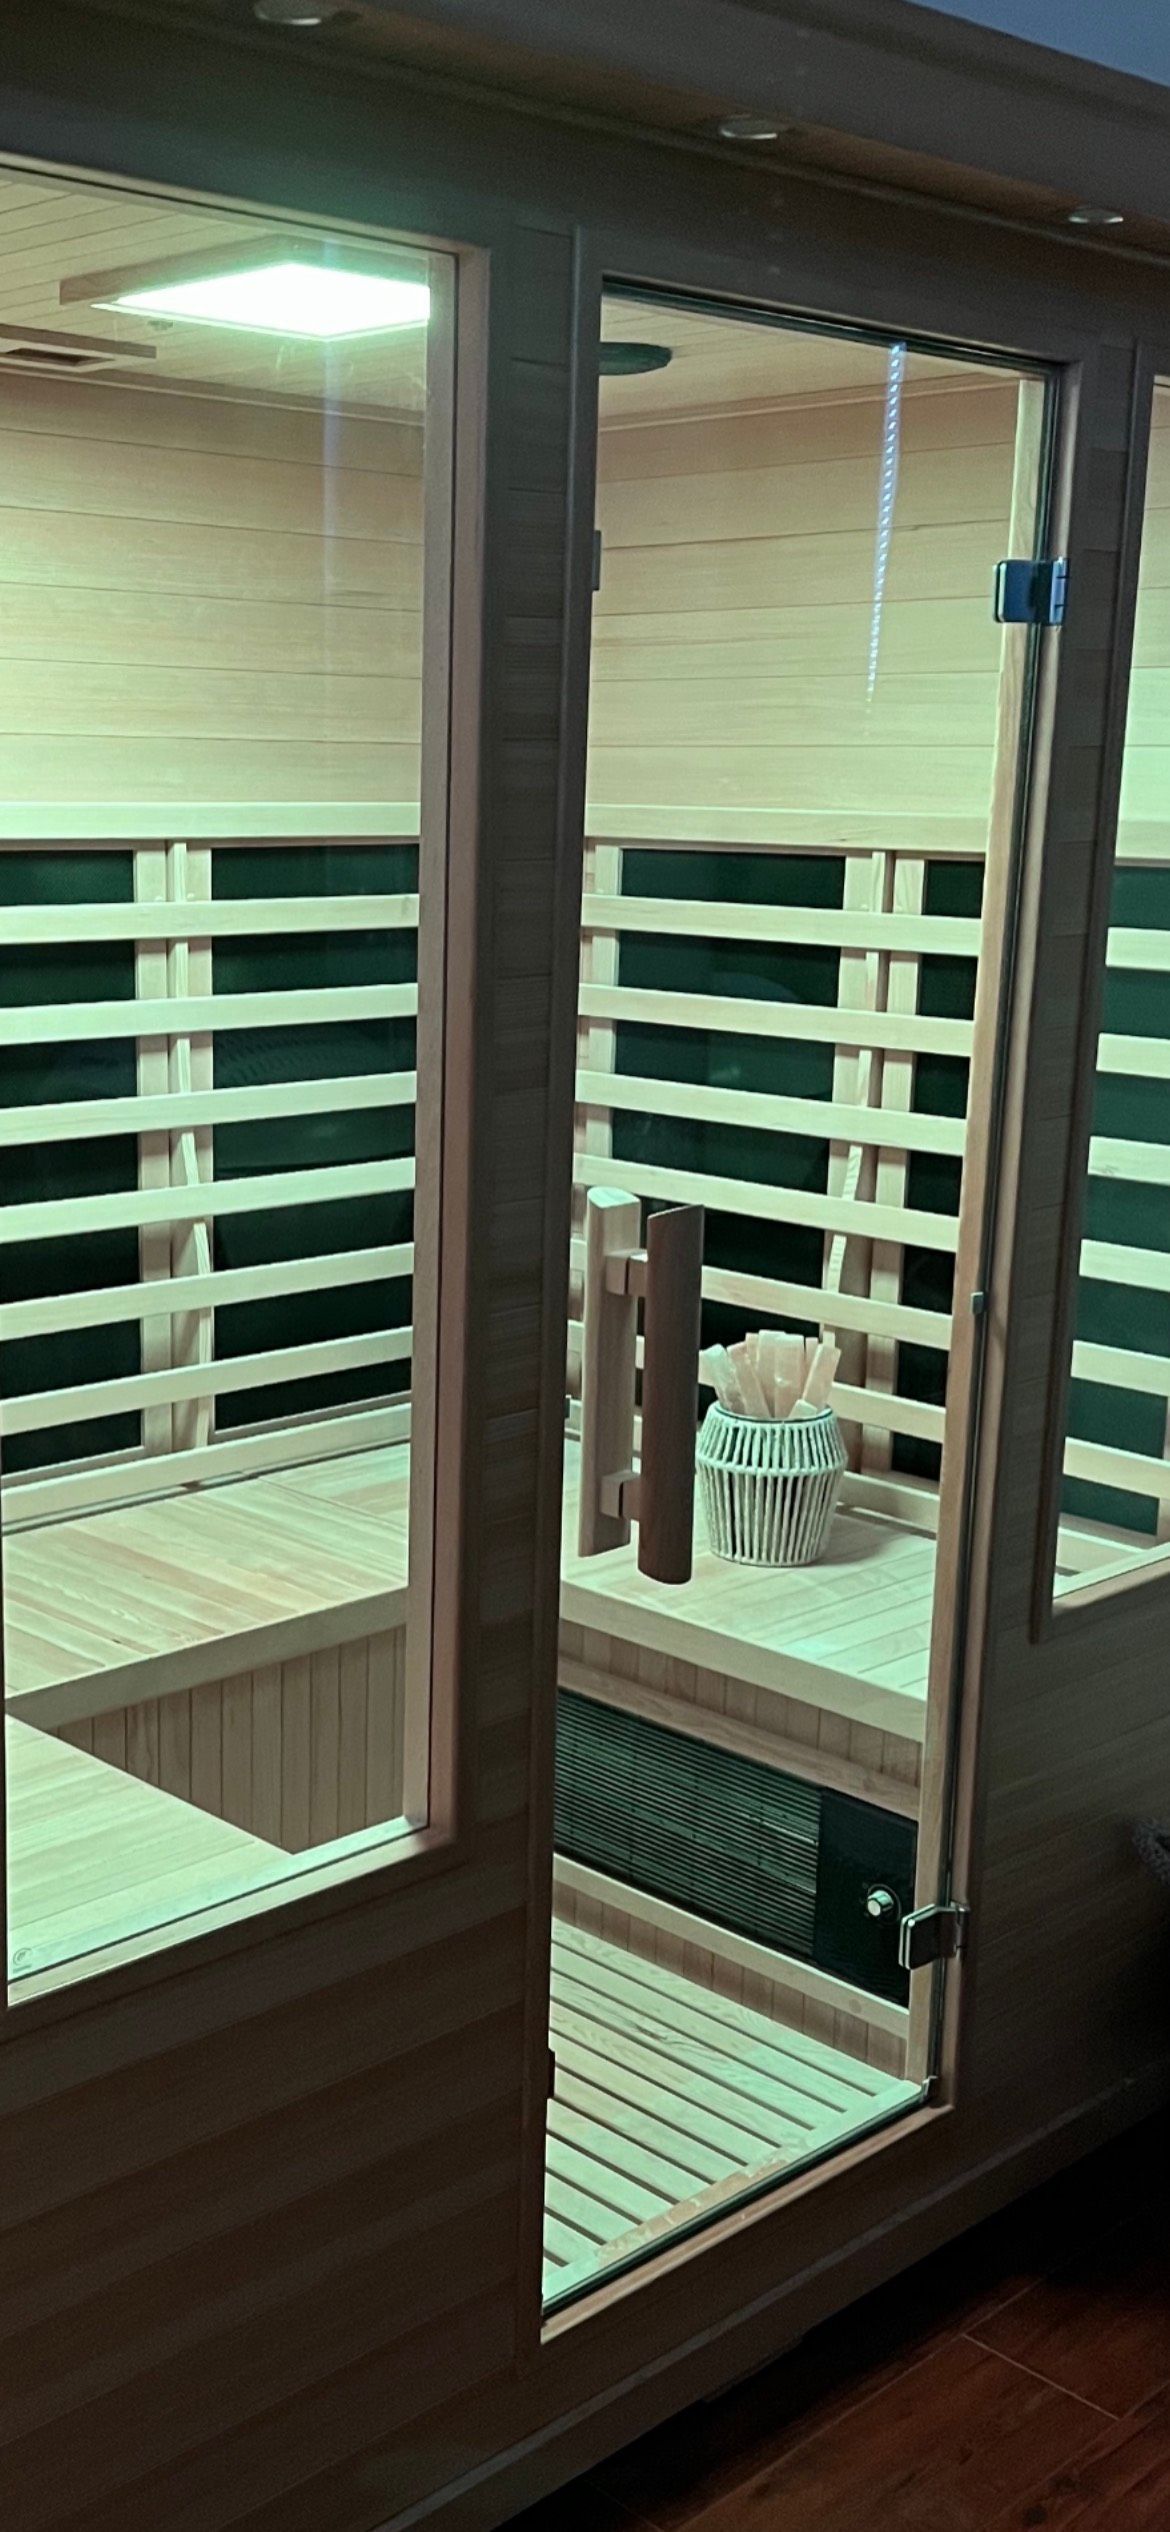 A wooden sauna with a glass door.